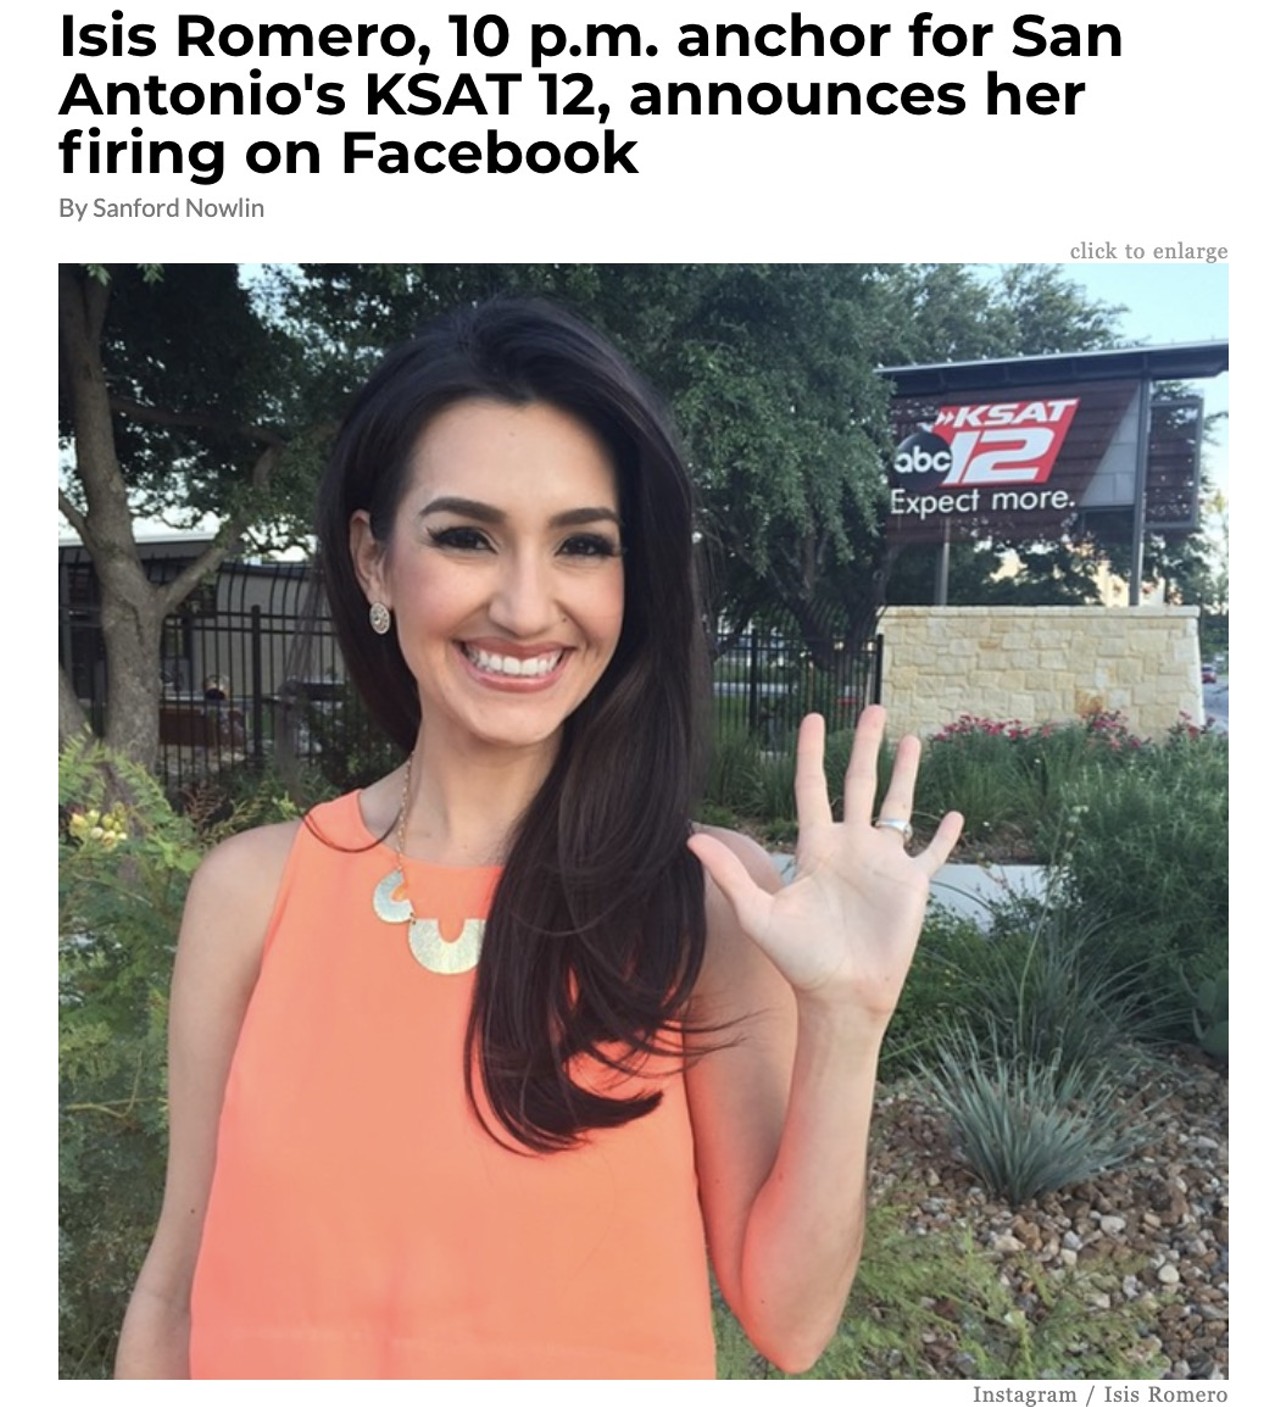 1. Isis Romero, 10 p.m. anchor for San Antonio's KSAT 12, announces her firing on Facebook 